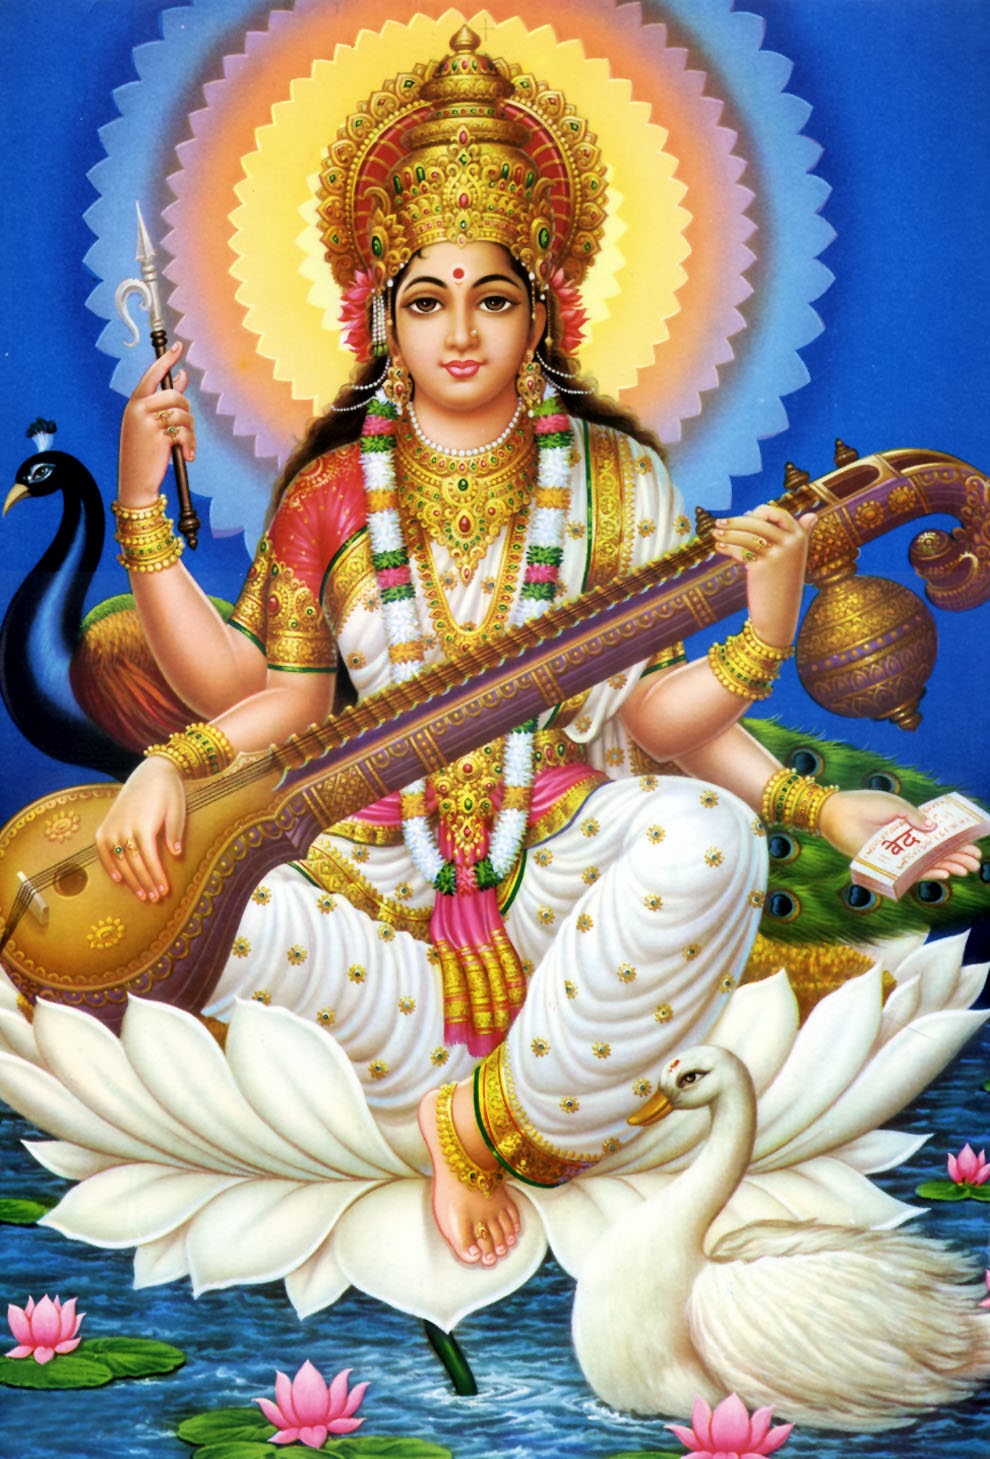 saraswati tapete,gezupfte saiteninstrumente,musikinstrument,erfundener charakter,guru,mythologie